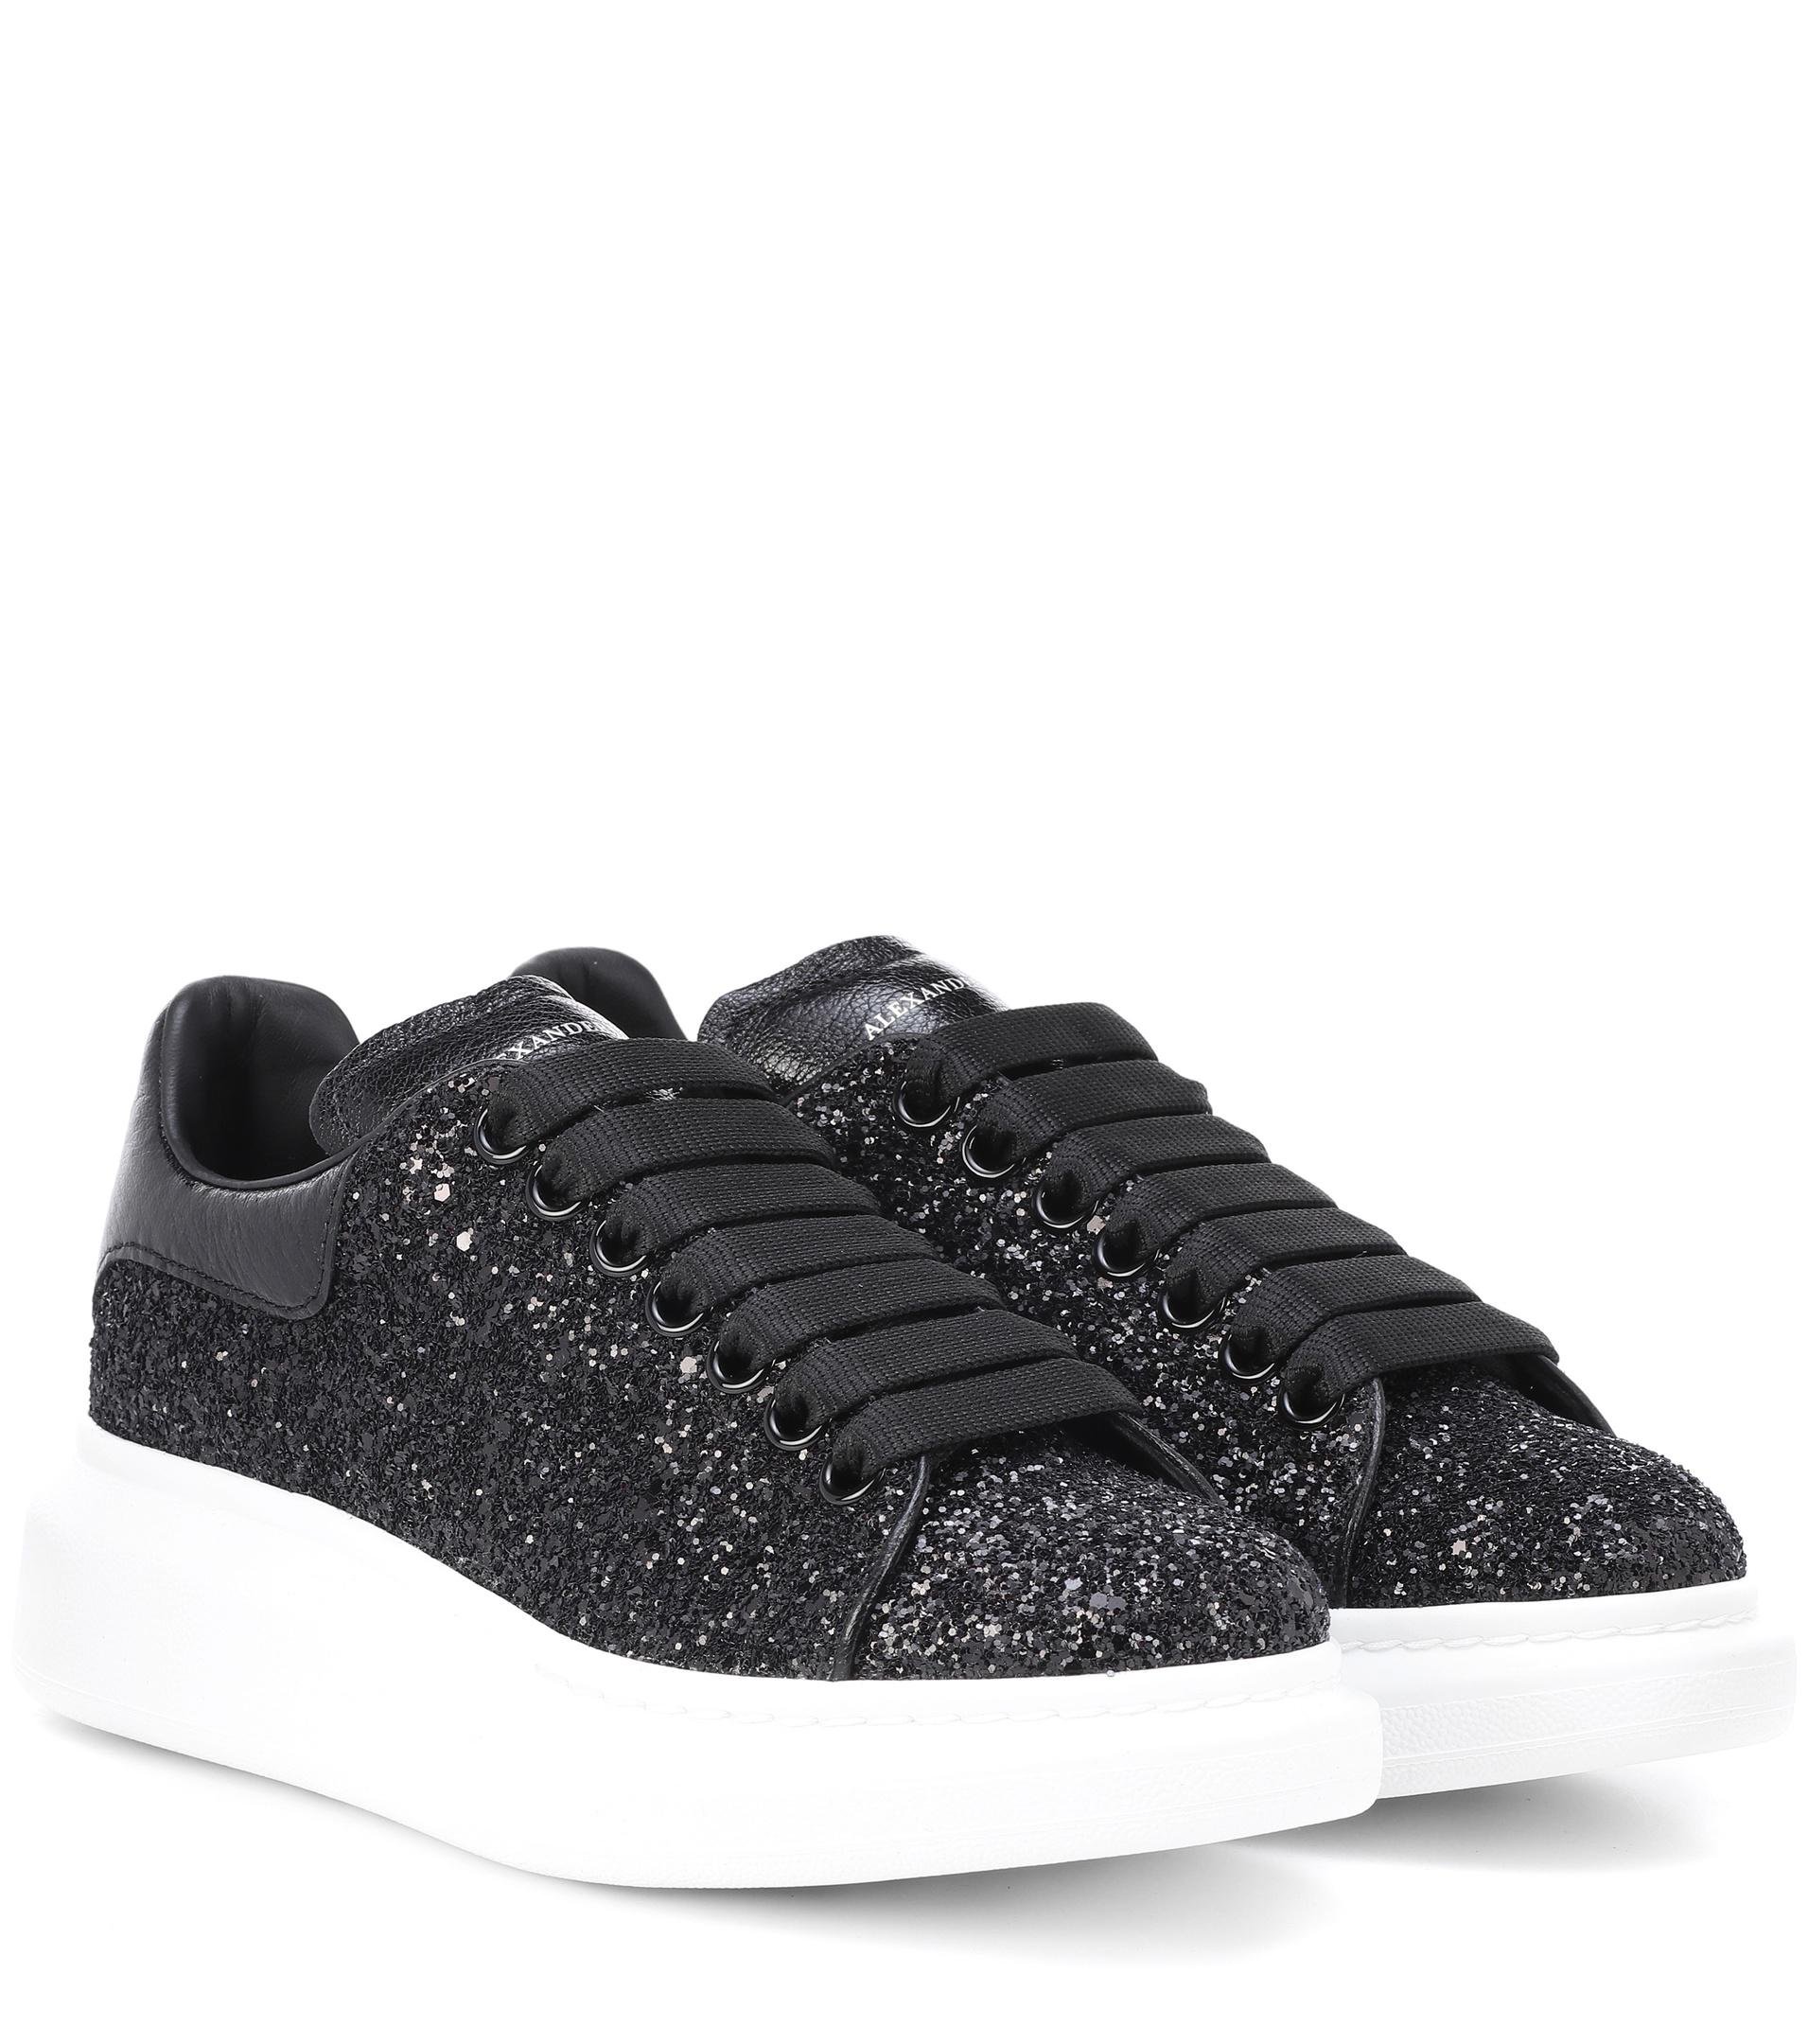 Alexander McQueen Leather Black Glitter Platform Sneakers - Lyst